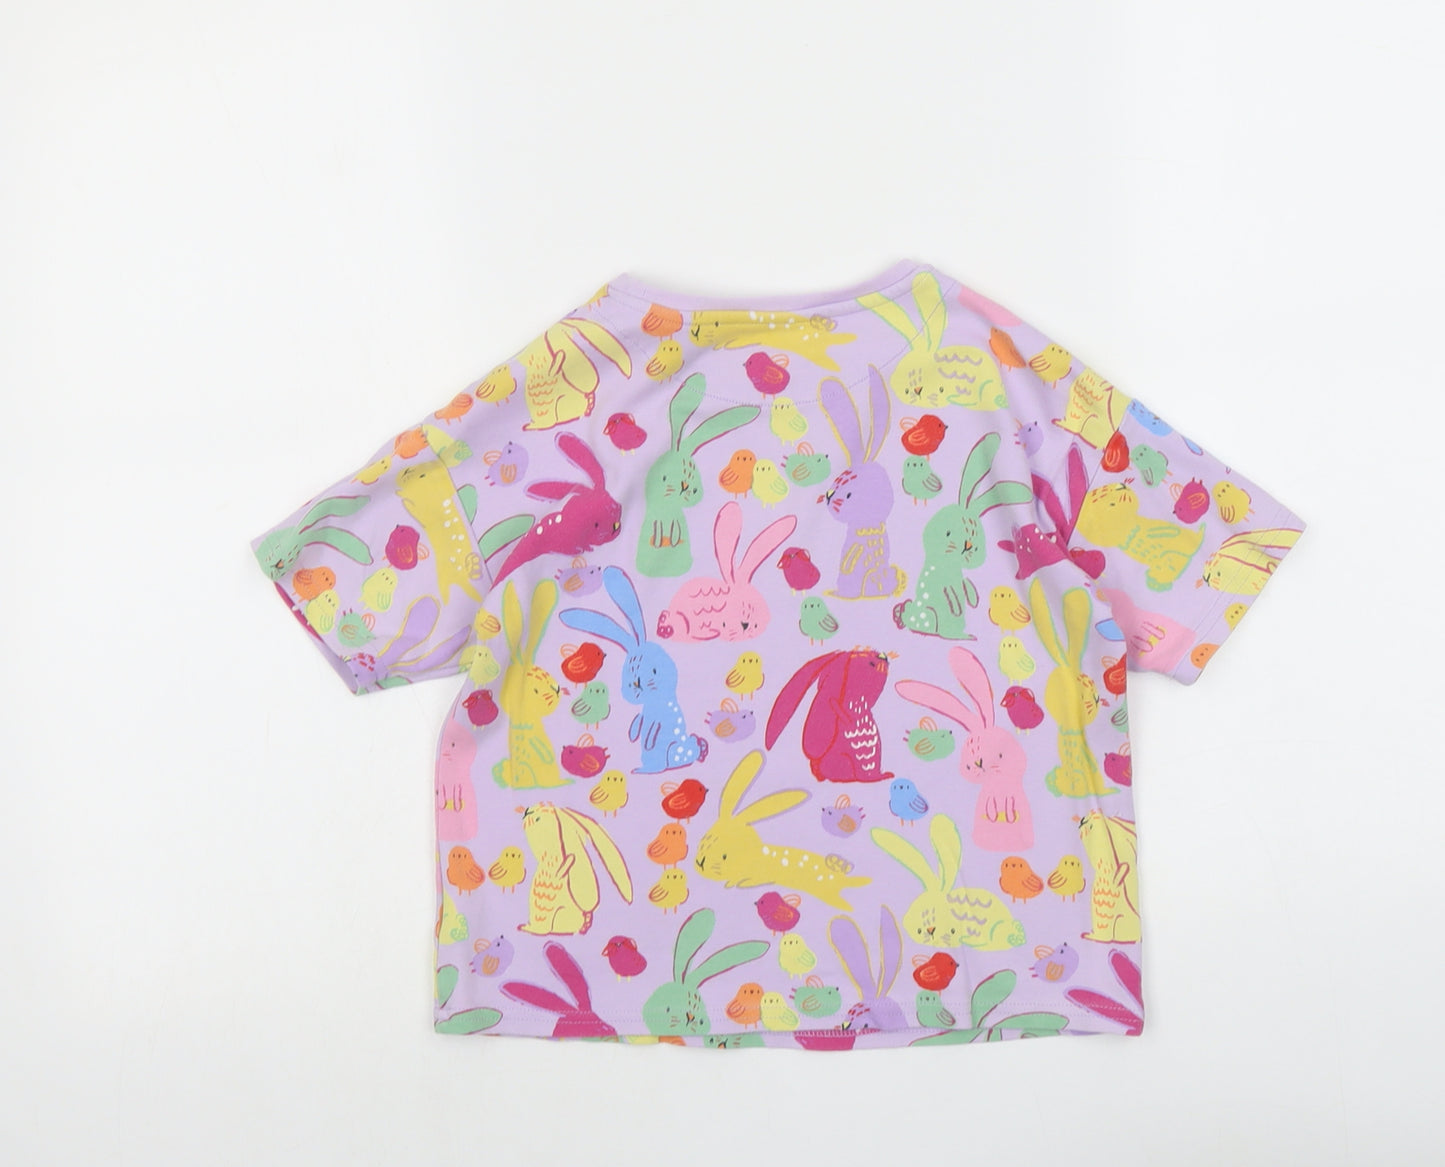 NEXT Girls Purple Geometric Cotton Basic T-Shirt Size 6-7 Years Round Neck Pullover - Rabbit Pattern